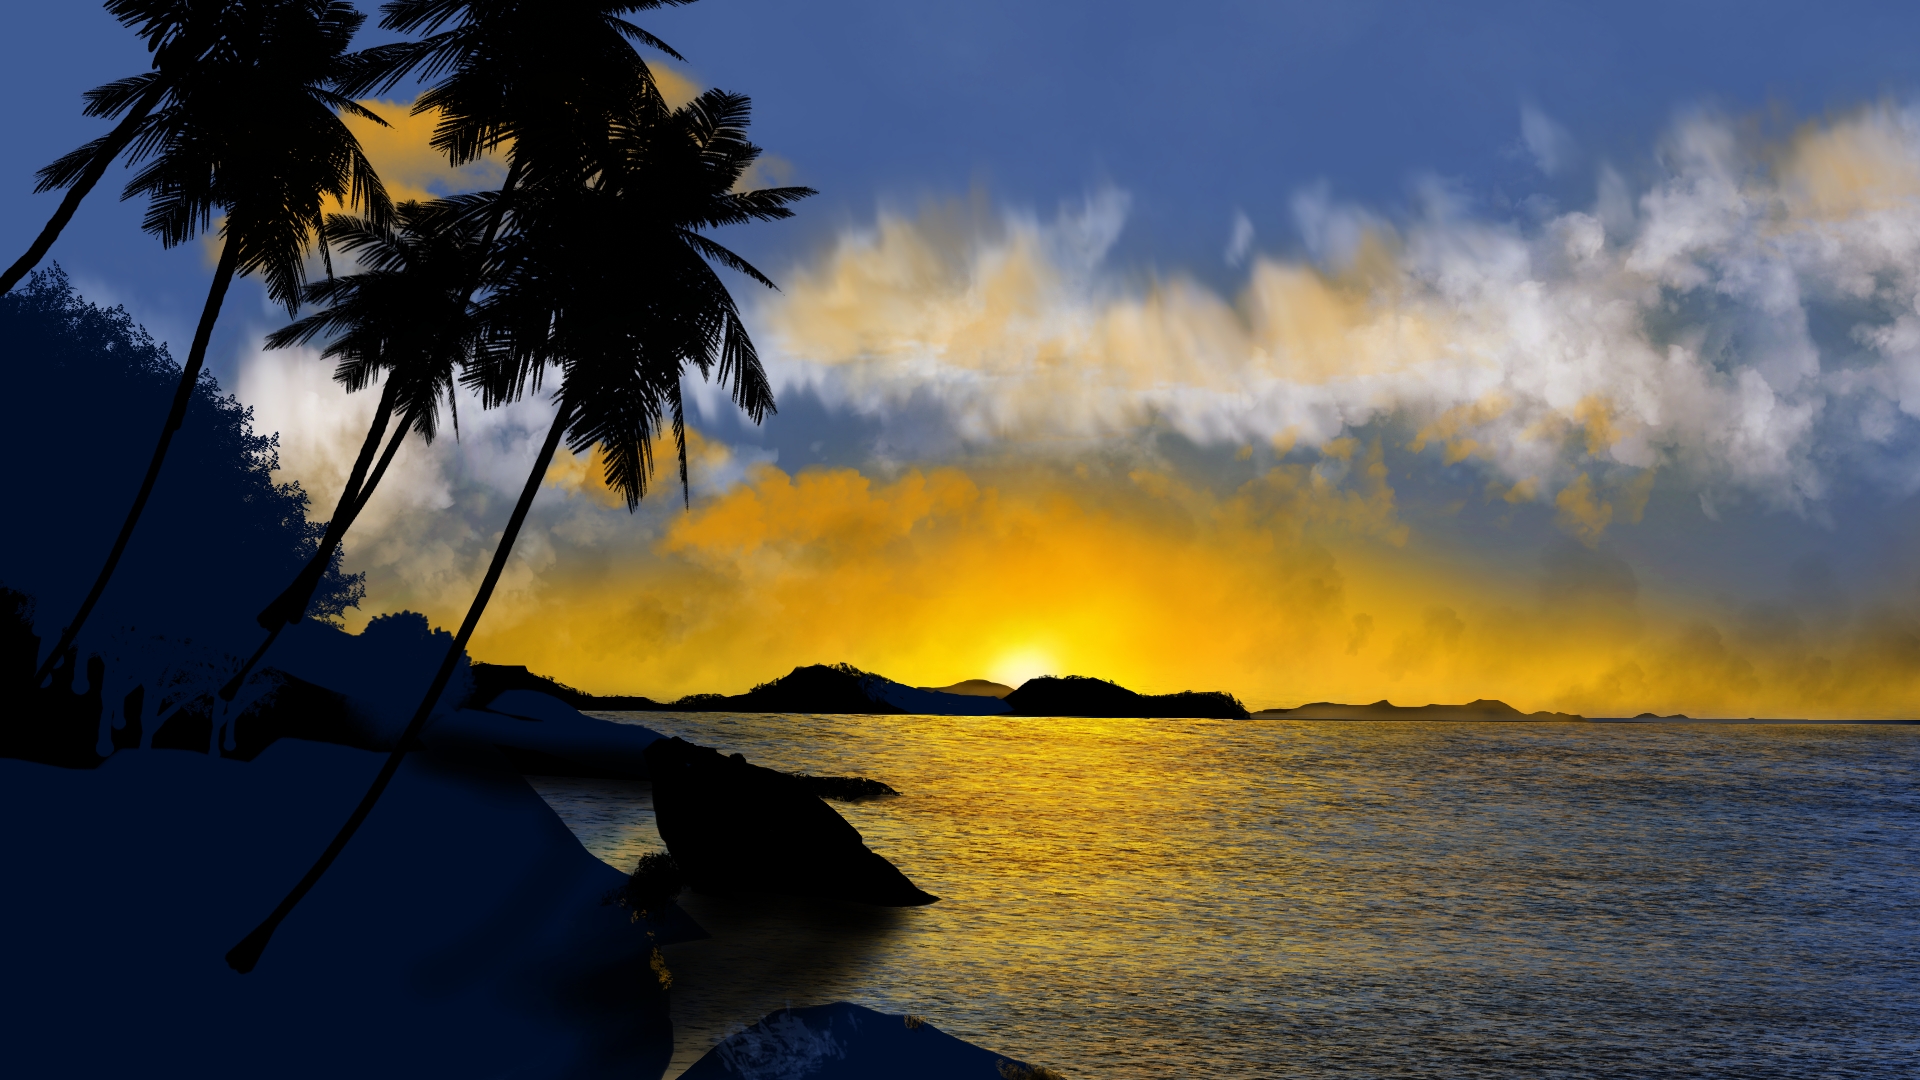 General 1920x1080 digital painting digital art nature ocean view palm trees sunset clouds water trees